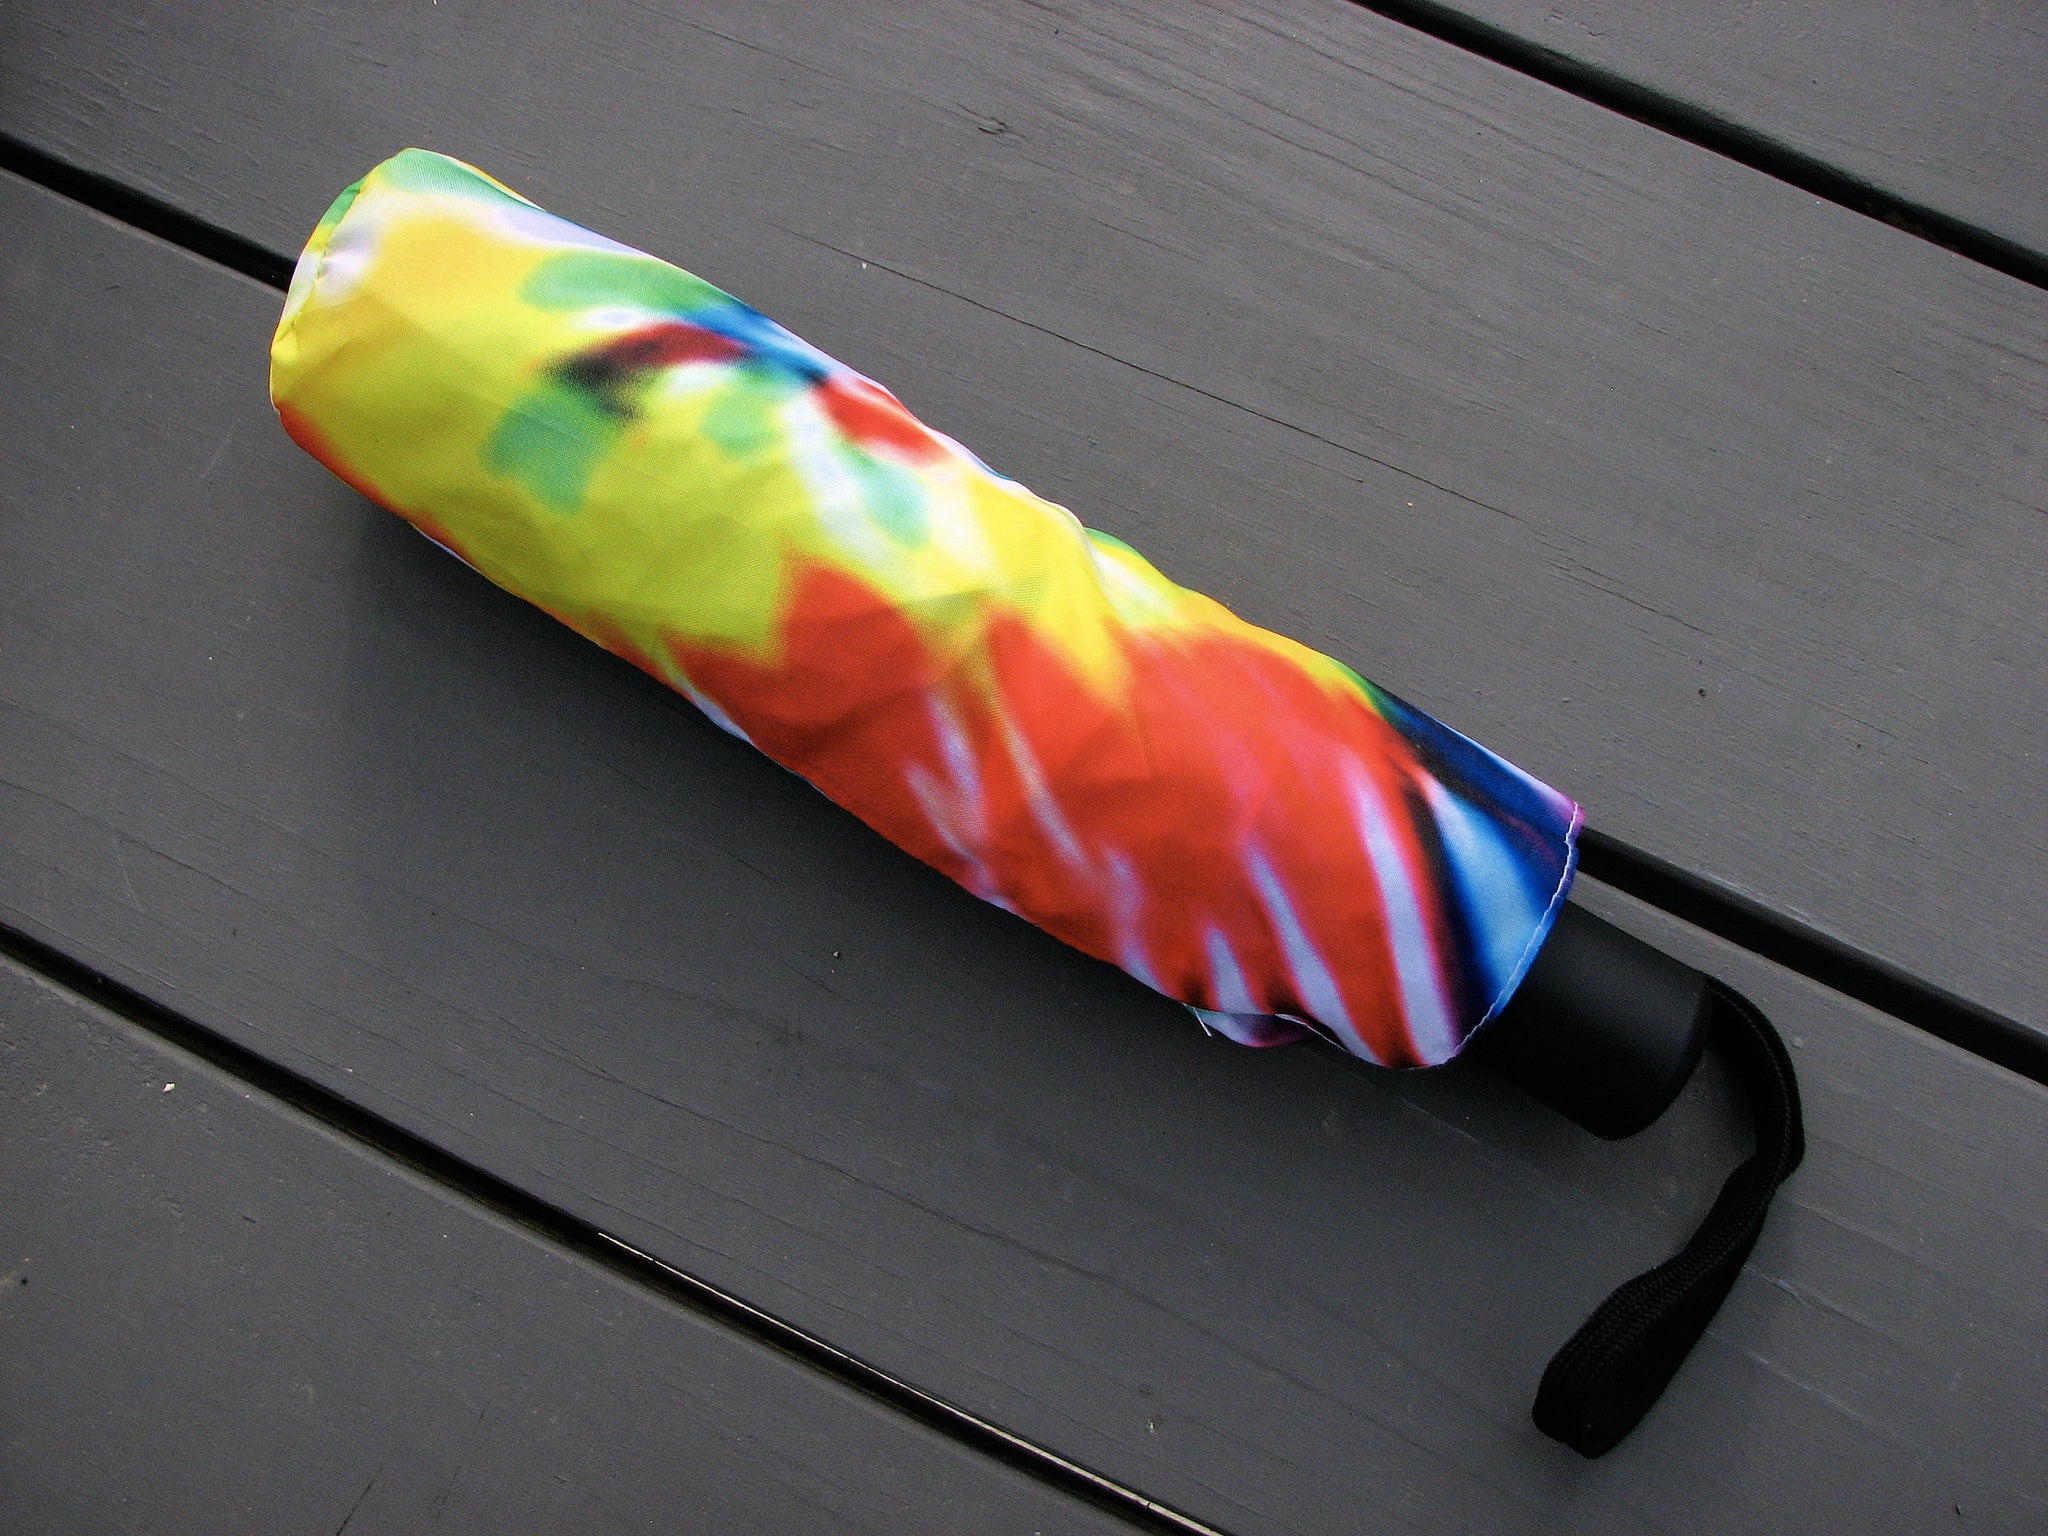 Tie Dye Automatic Foldable Umbrella